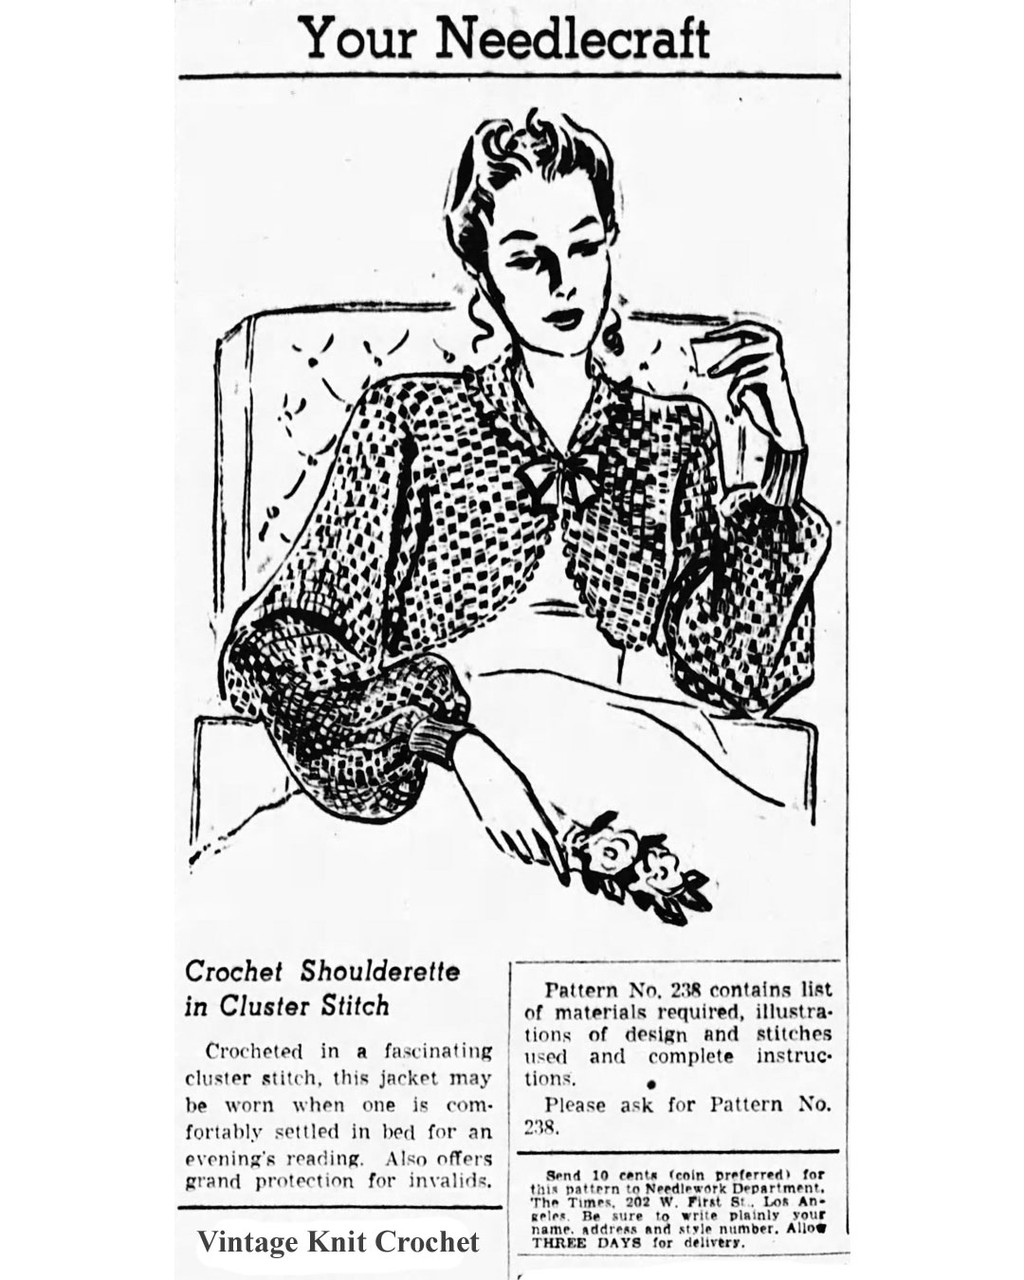 Vintage Needlework Bureau Newspaper Advertisement for Design 238, Crochet Shoulderette